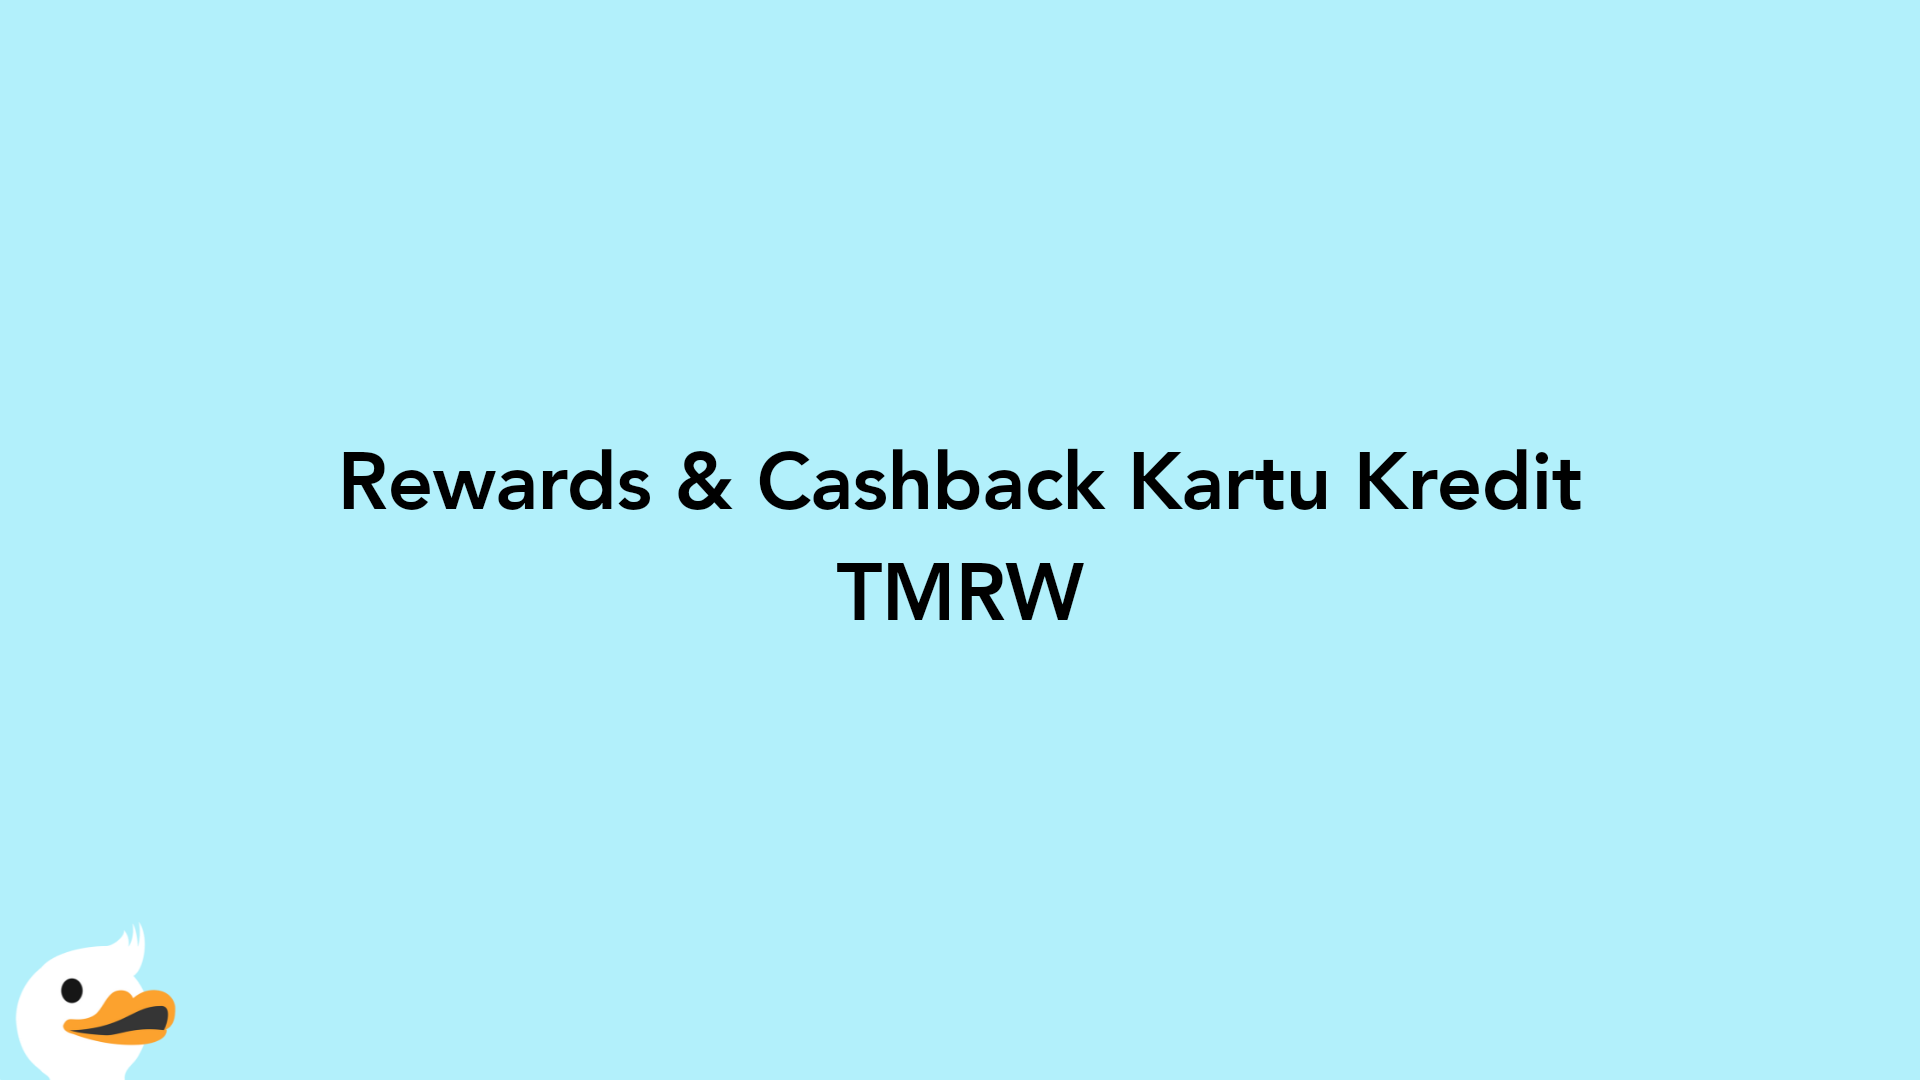 Rewards & Cashback Kartu Kredit TMRW